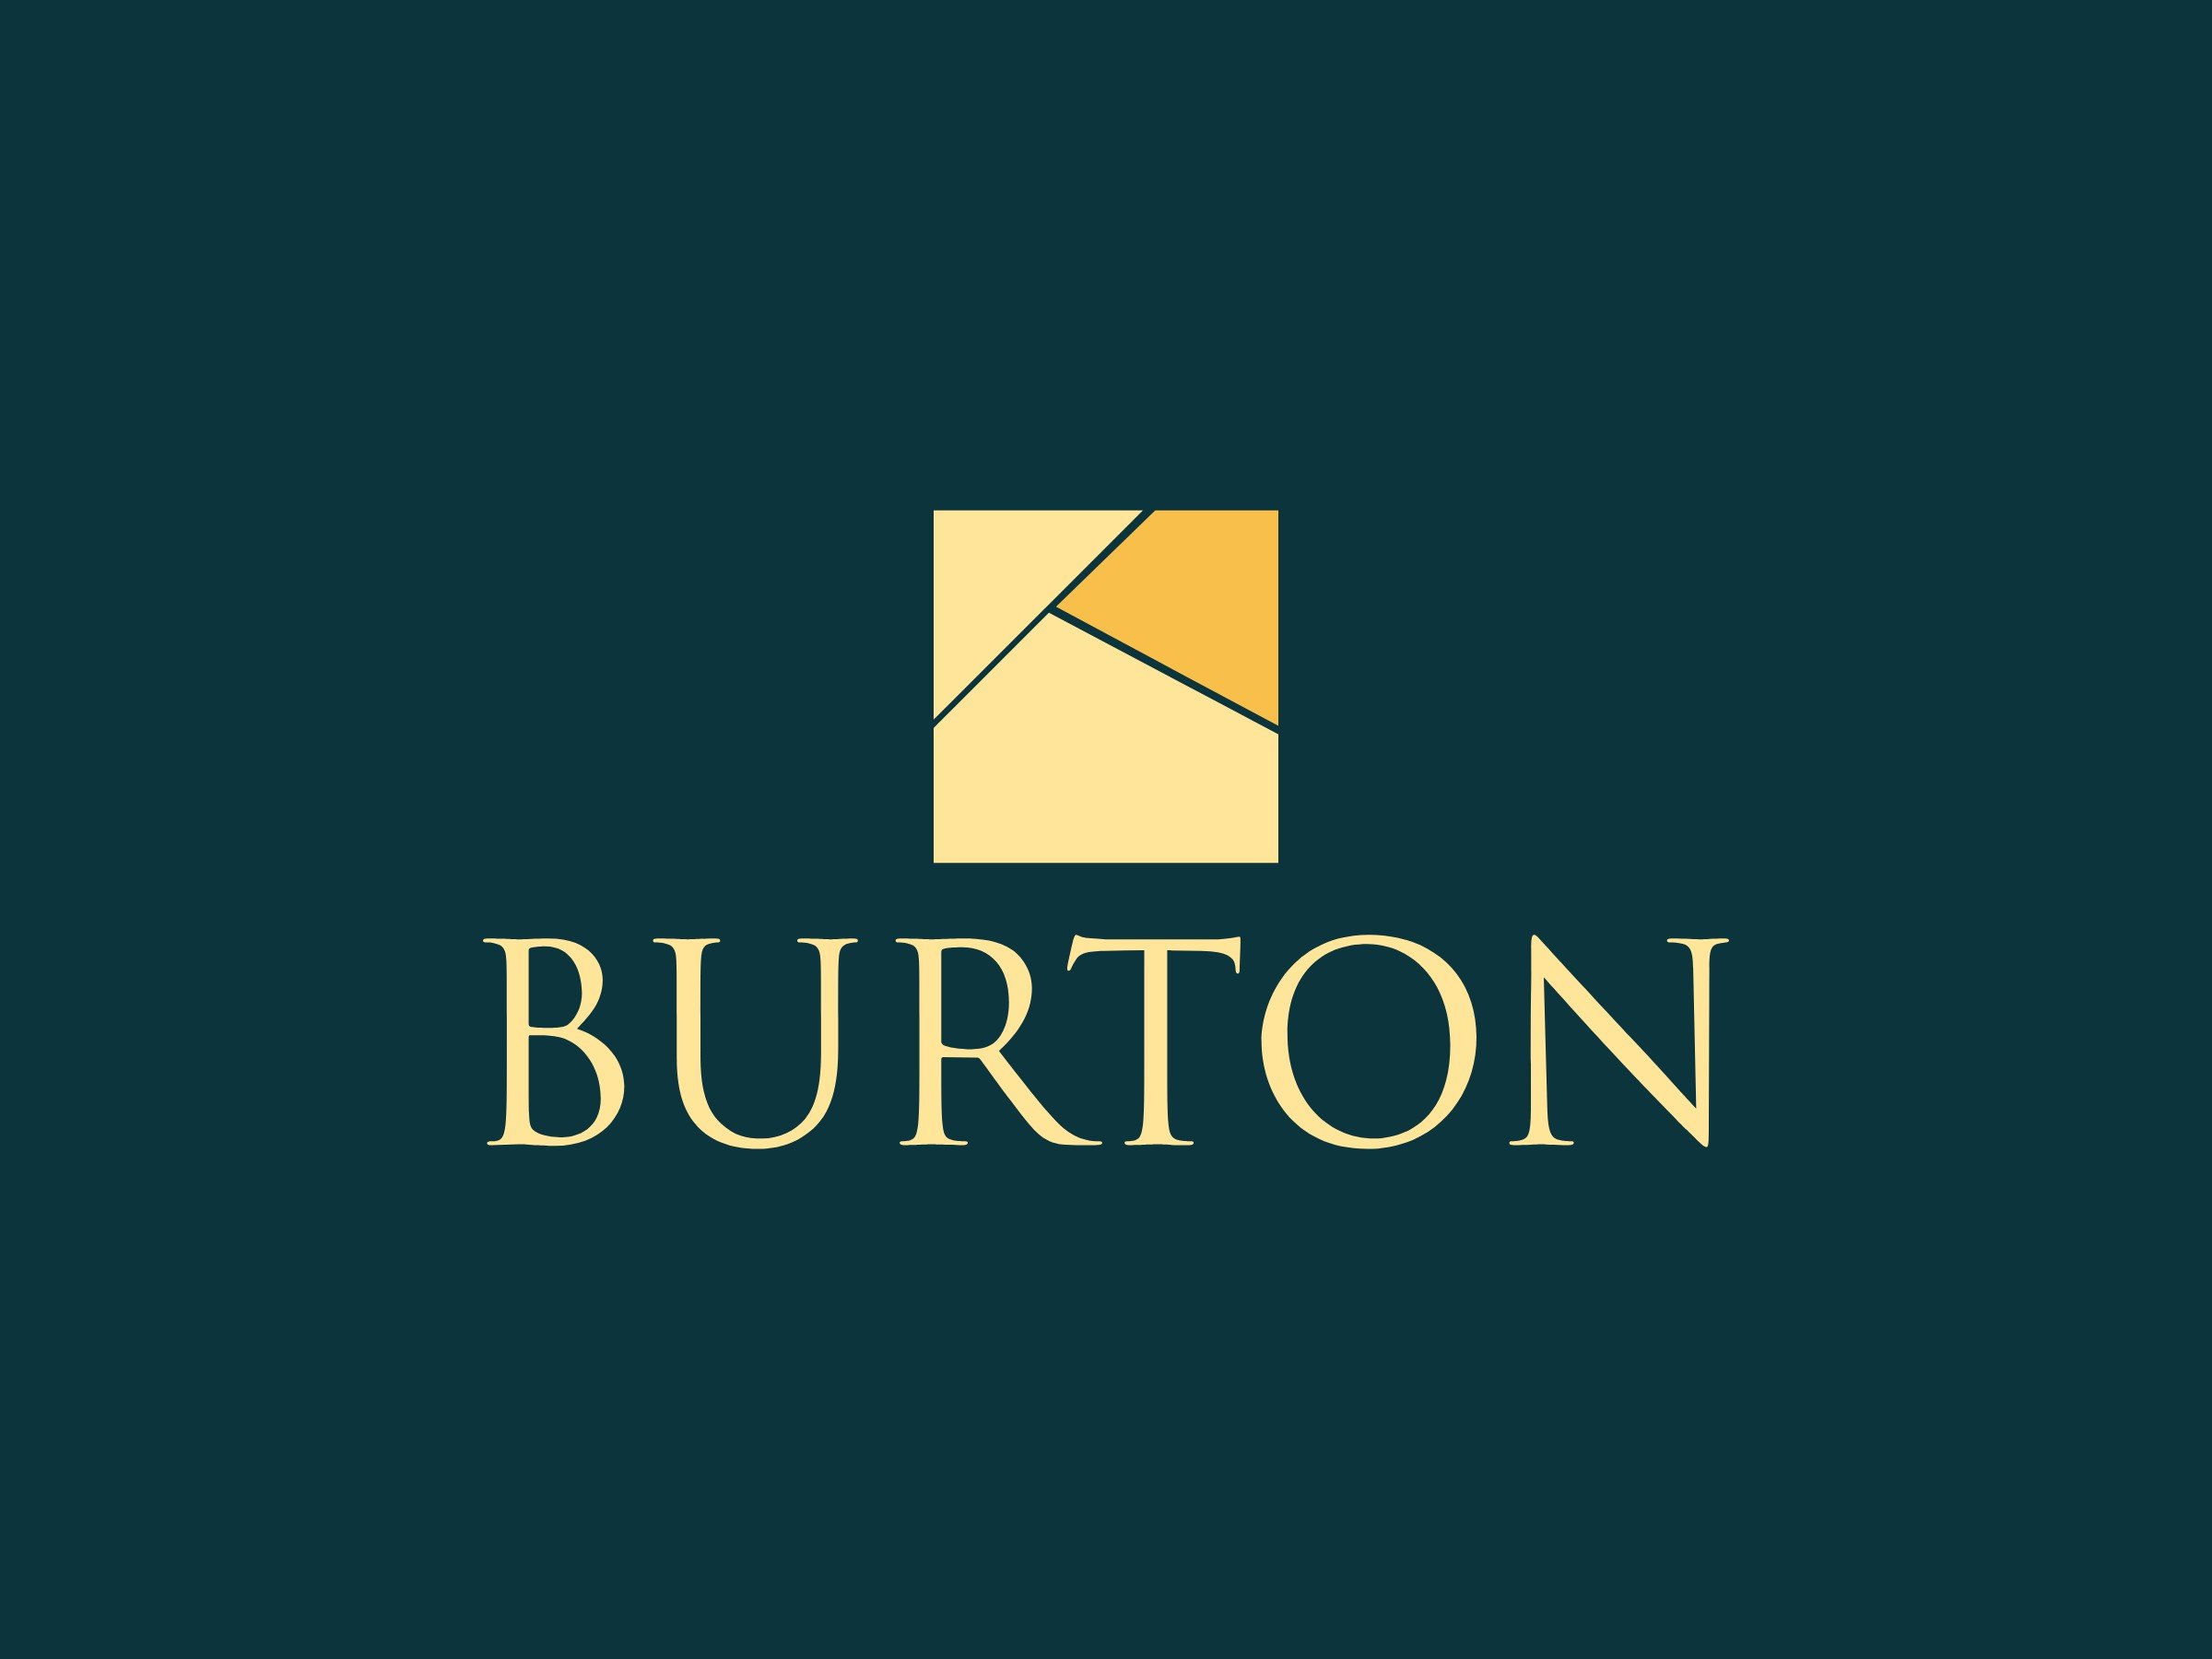 BURTON logo design